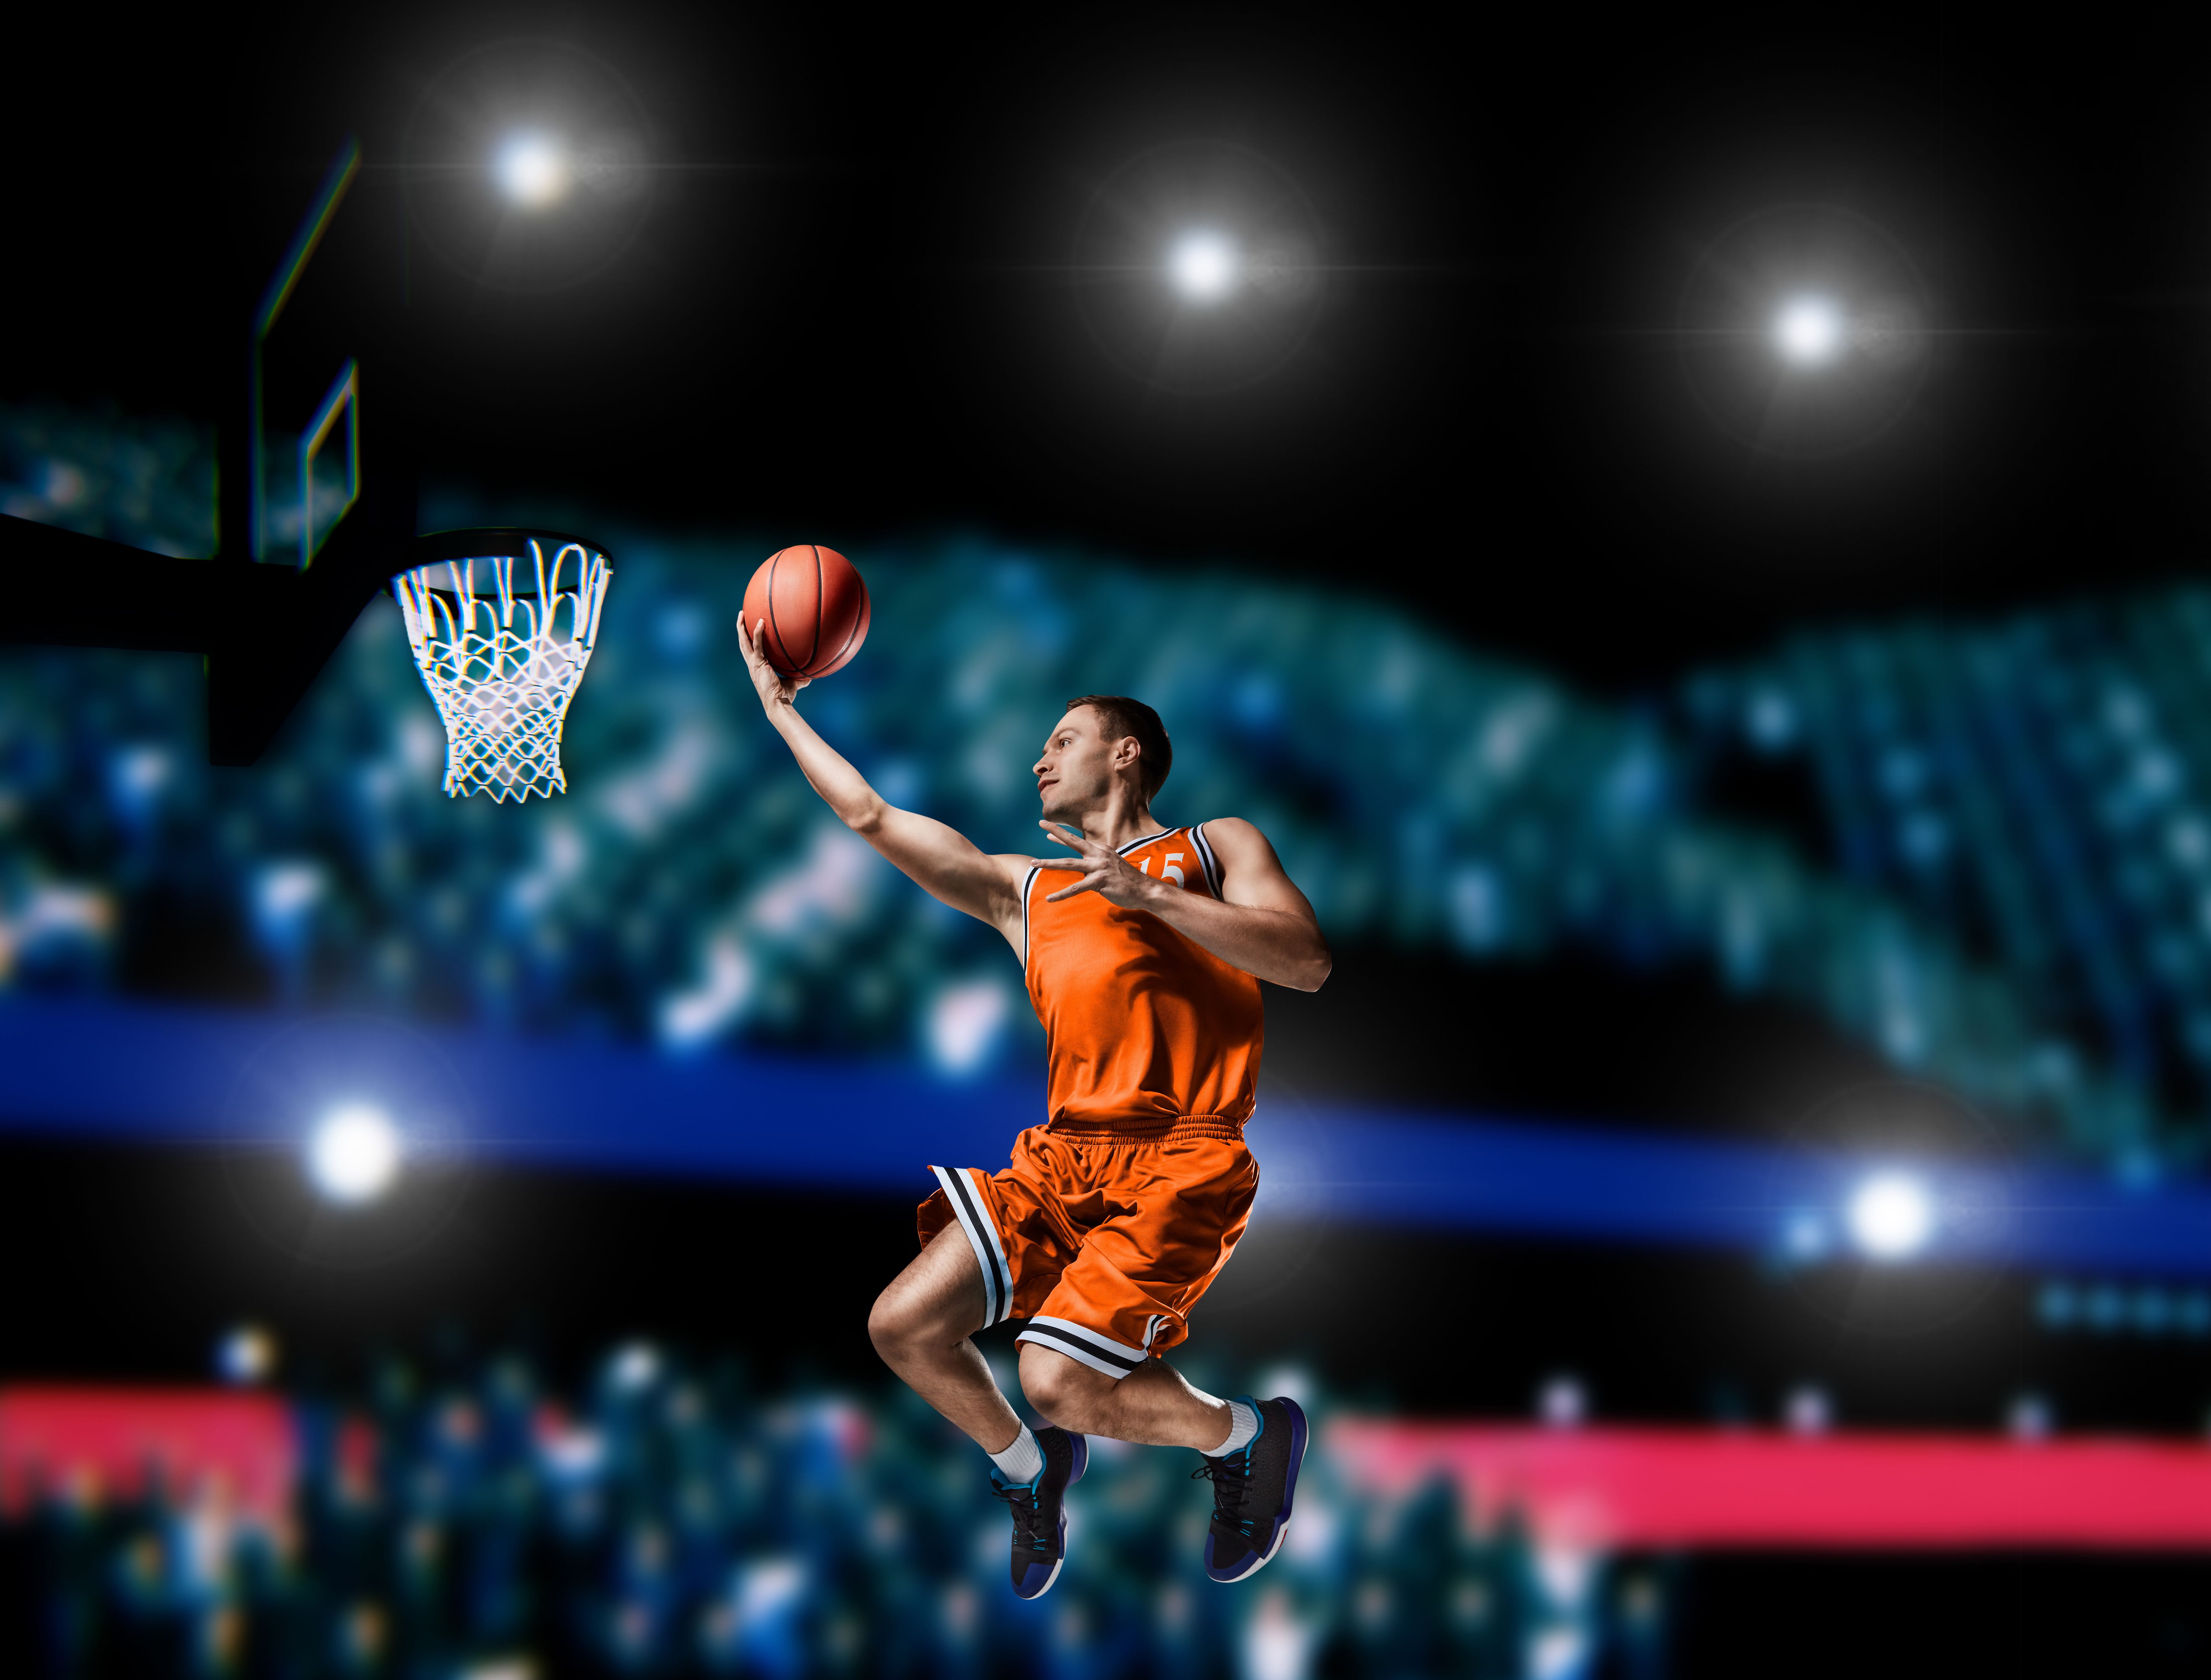 Wallpaper 4k Basketball Player Shooting 4k Basketball Player Shooting 4k wallpaper